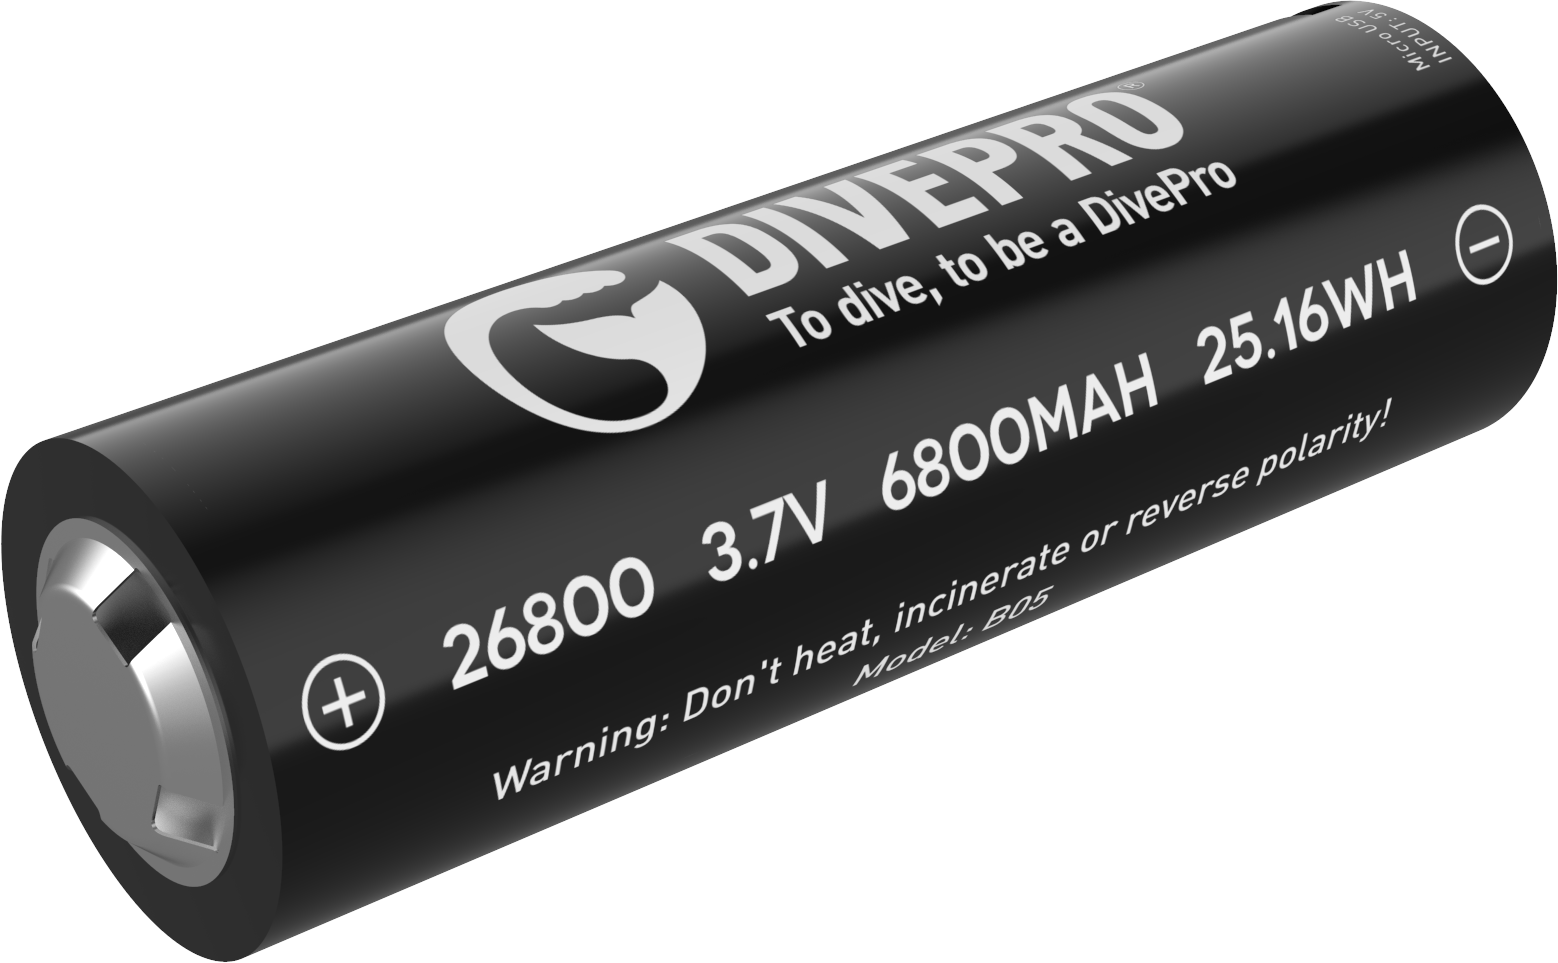 DivePro B10 Battery